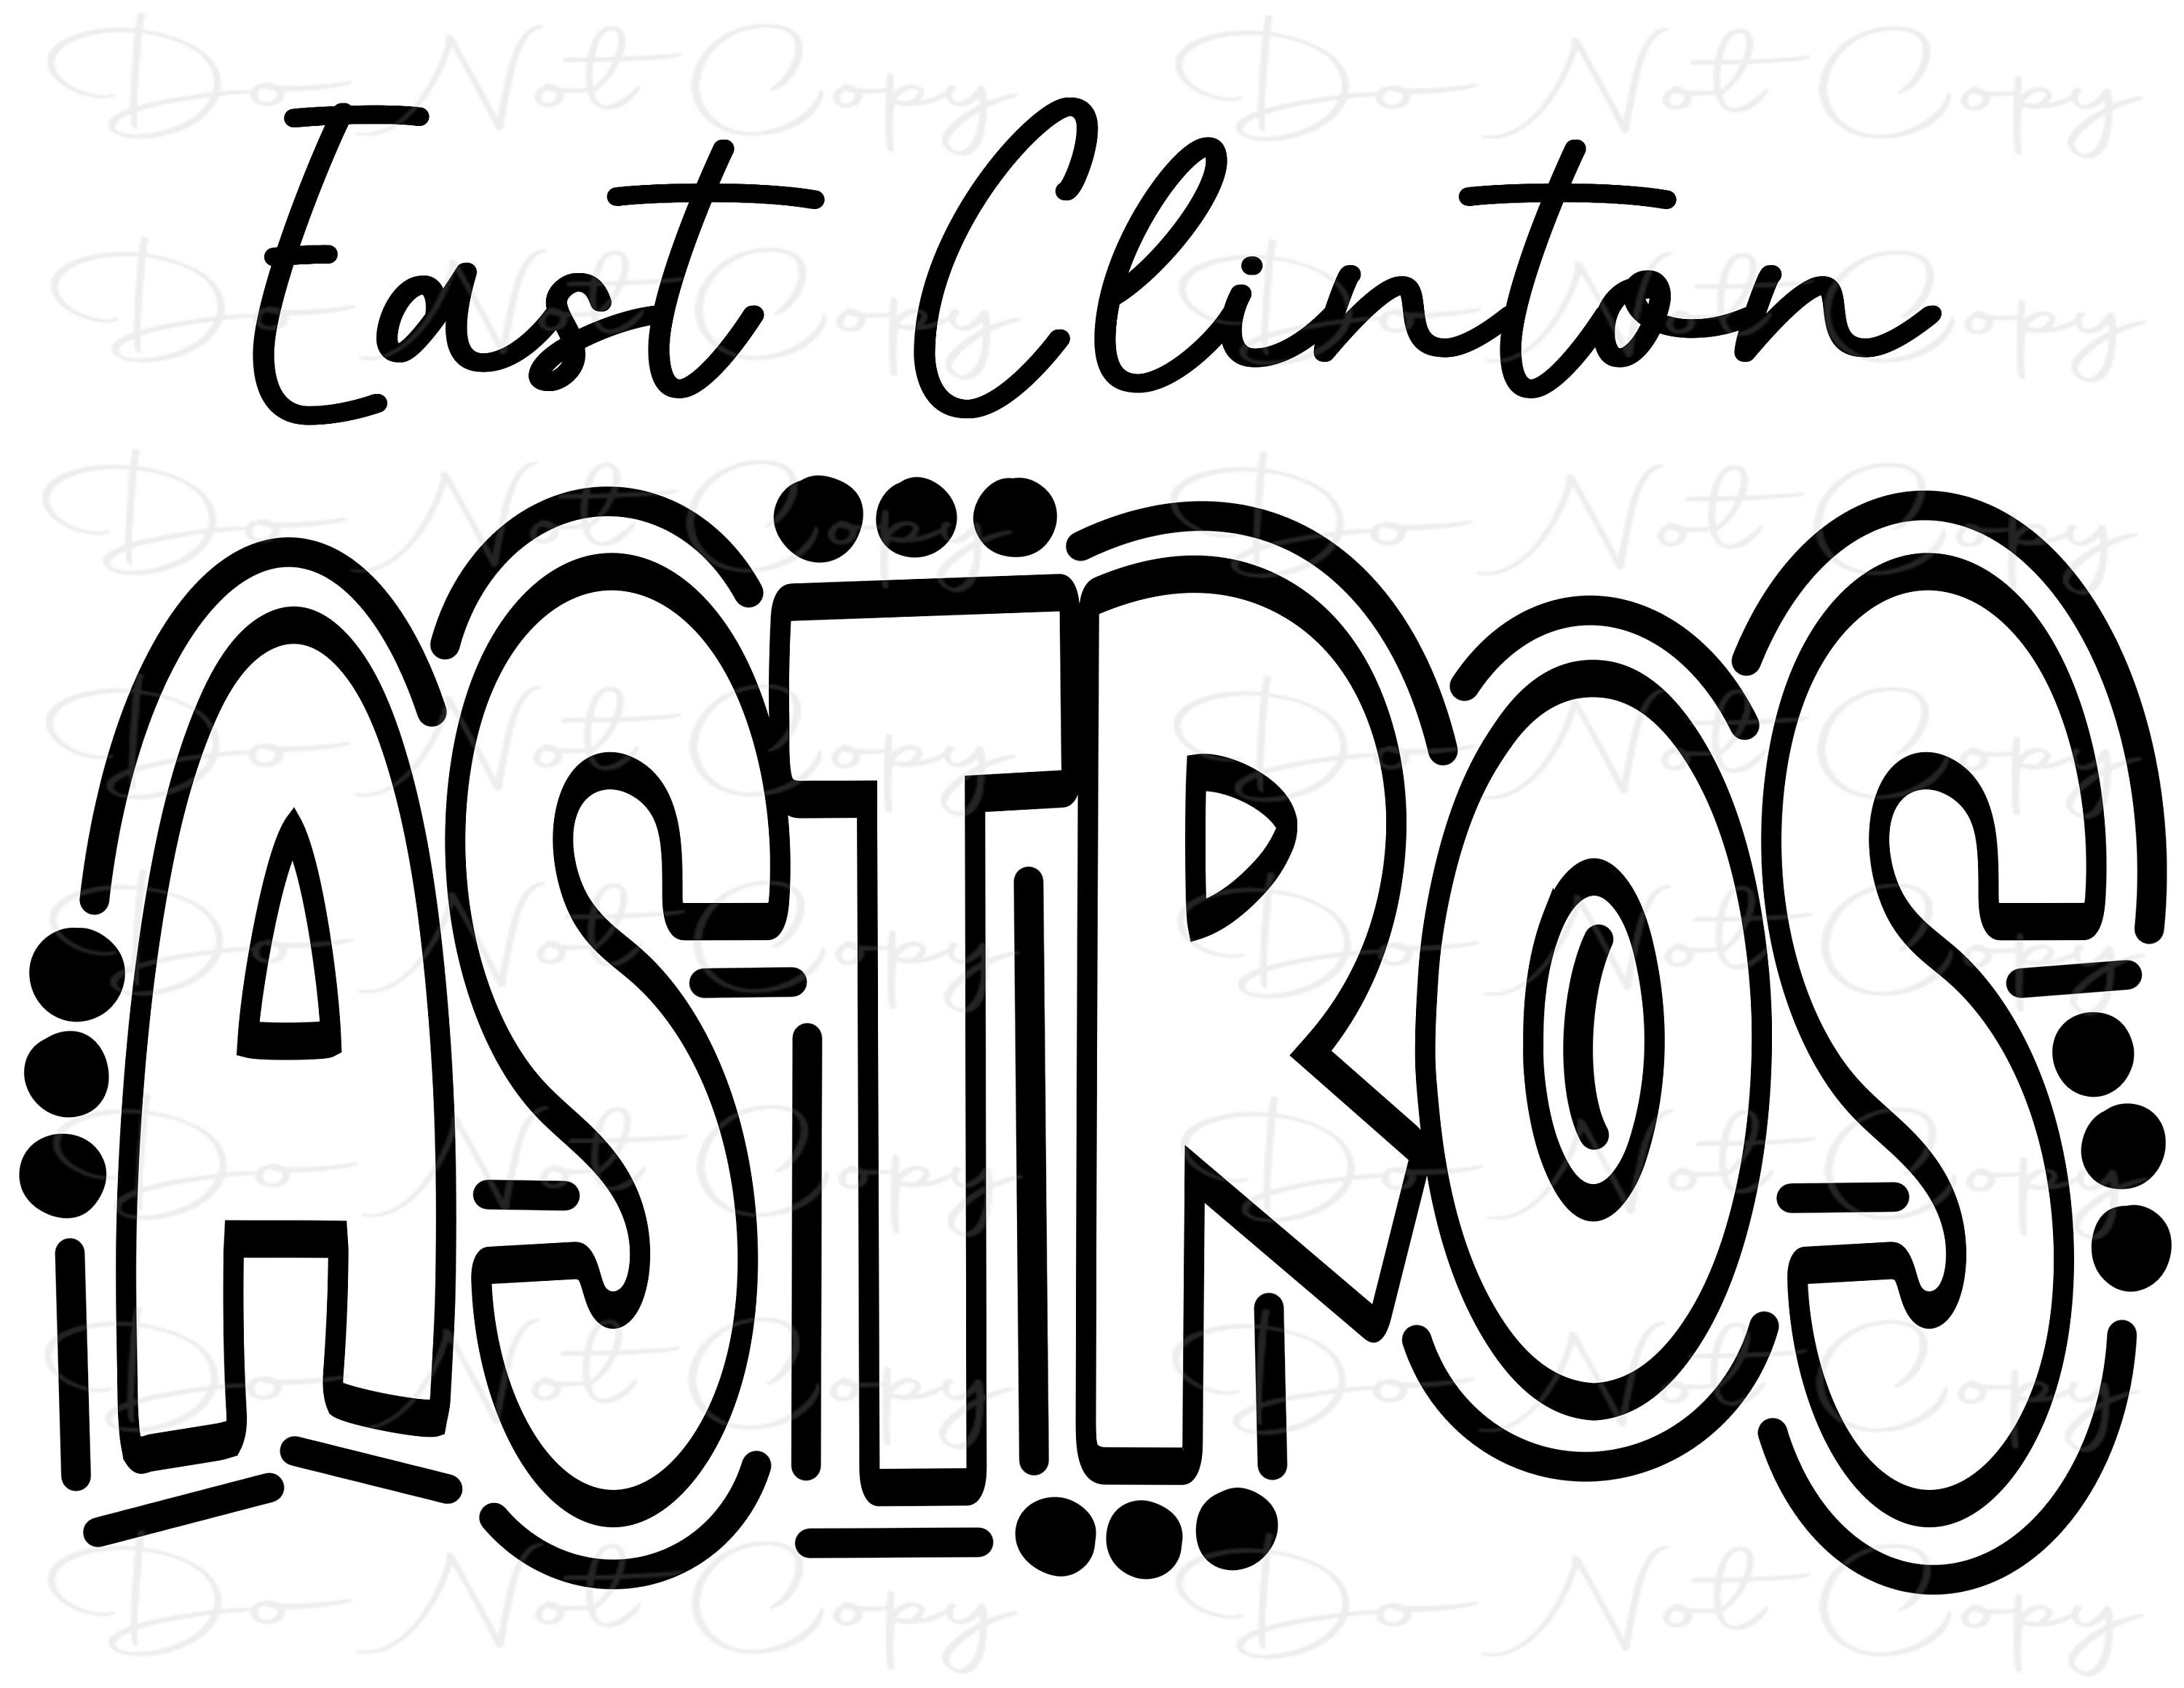 OH, East Clinton Astros - School Spirit Shirts & Apparel